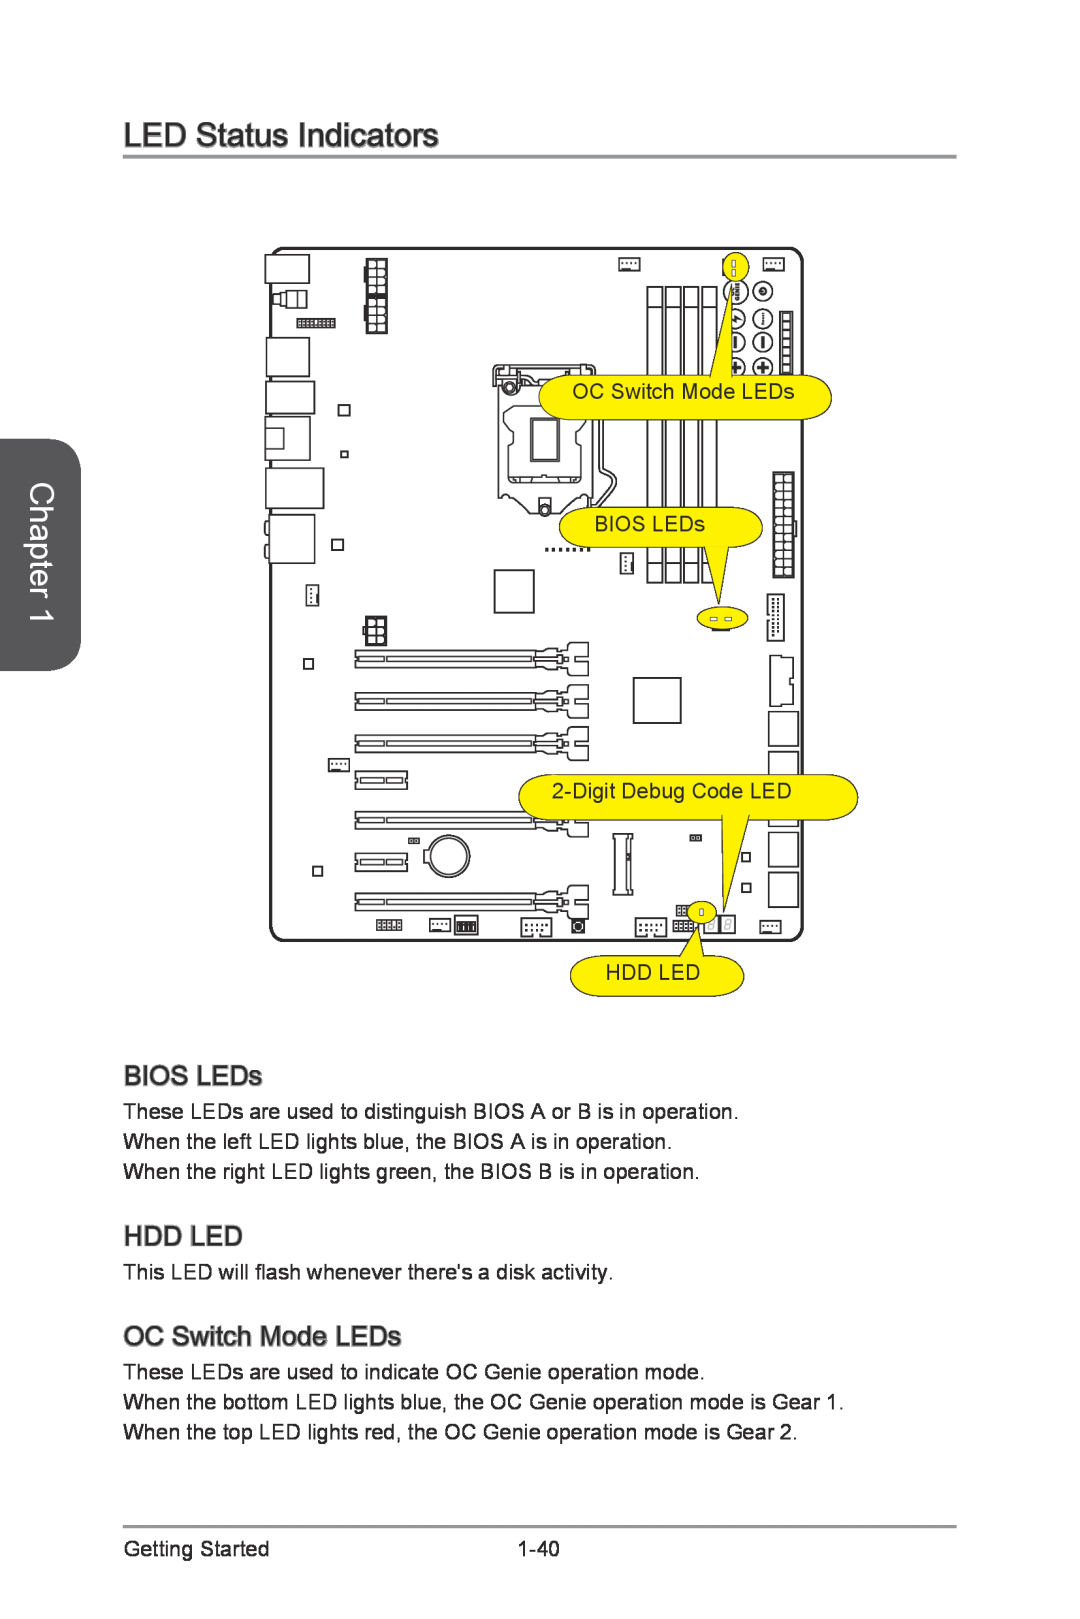 MSI Z87-XPOWER manual LED Status Indicators, BIOS LEDs, Hdd Led, OC Switch Mode LEDs, Chapter 